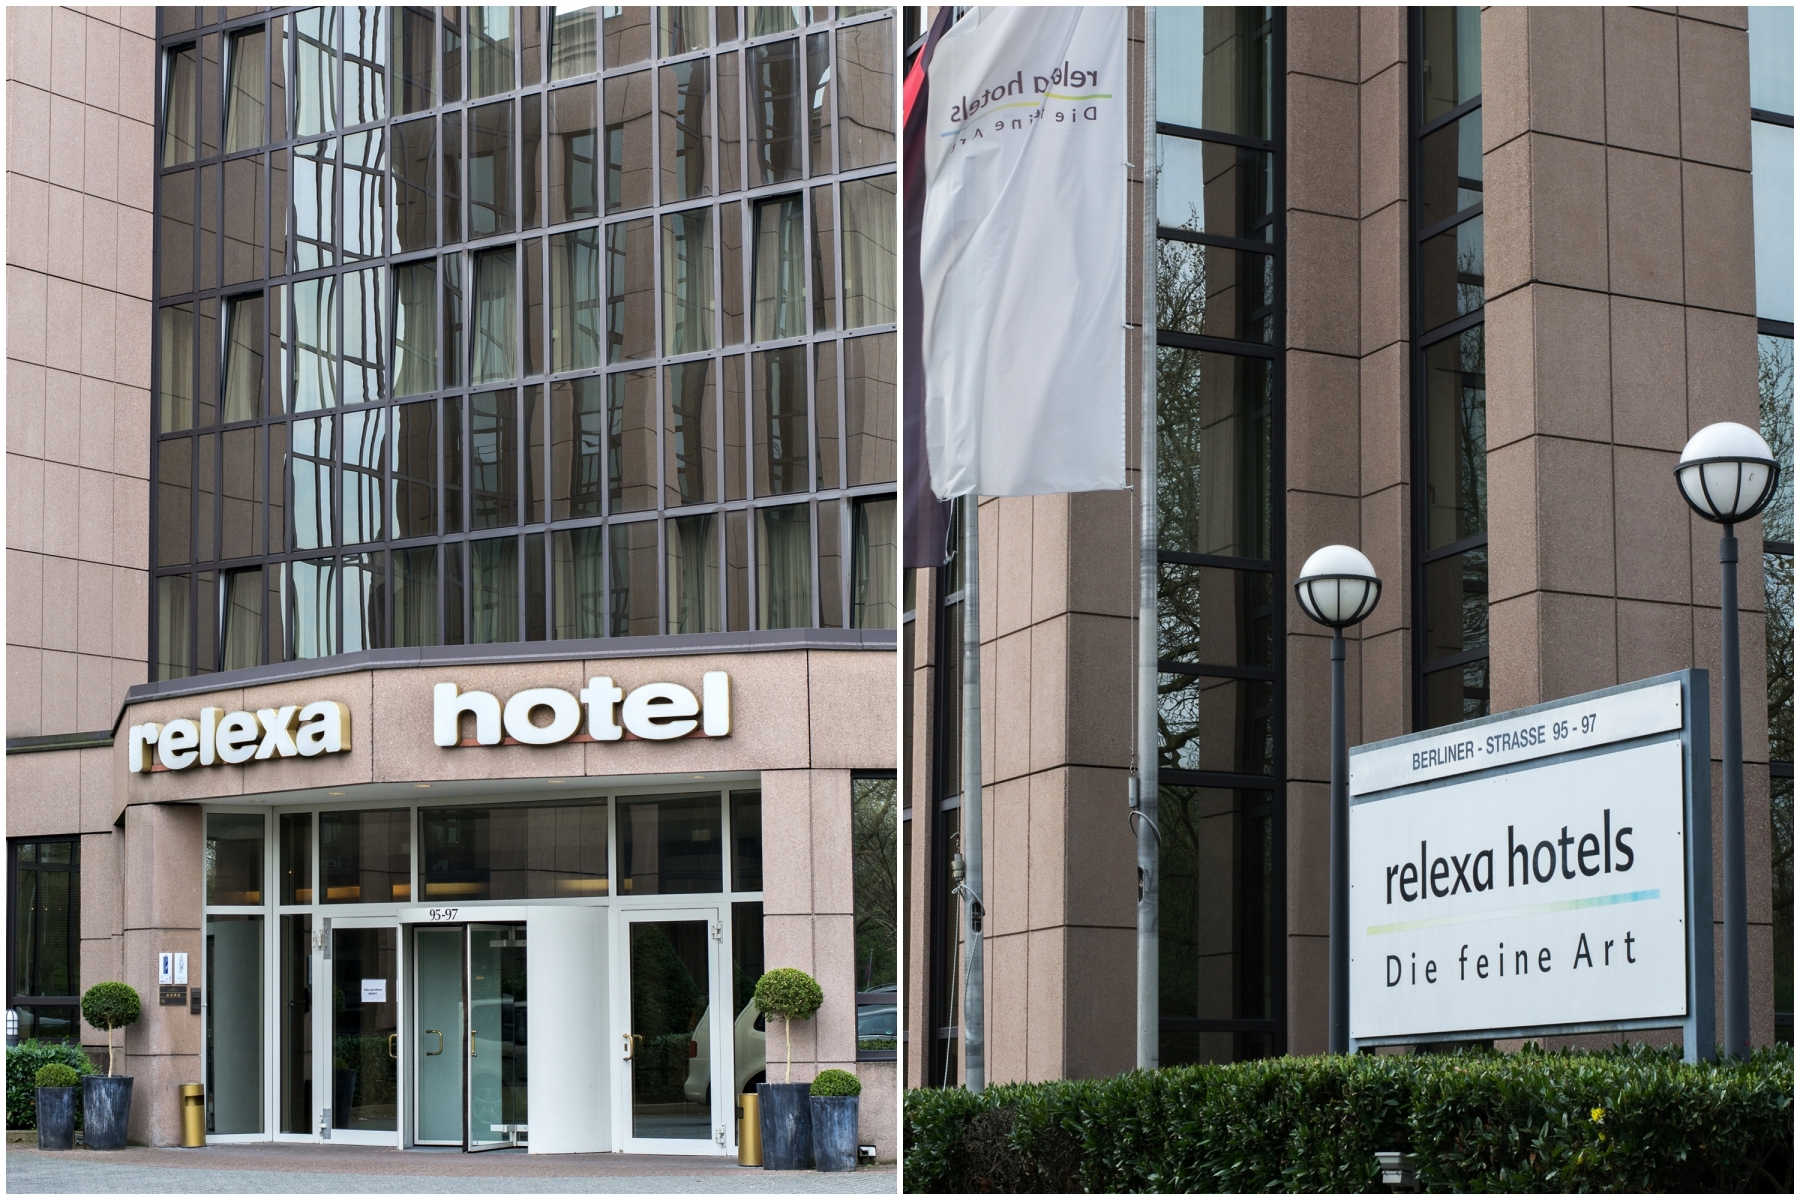 relexa hotel Düsseldorf-Ratingen <br/>55.20 ew <br/> <a href='http://vakantieoplossing.nl/outpage/?id=126522e3723c8fe80169c6b459125dee' target='_blank'>View Details</a>